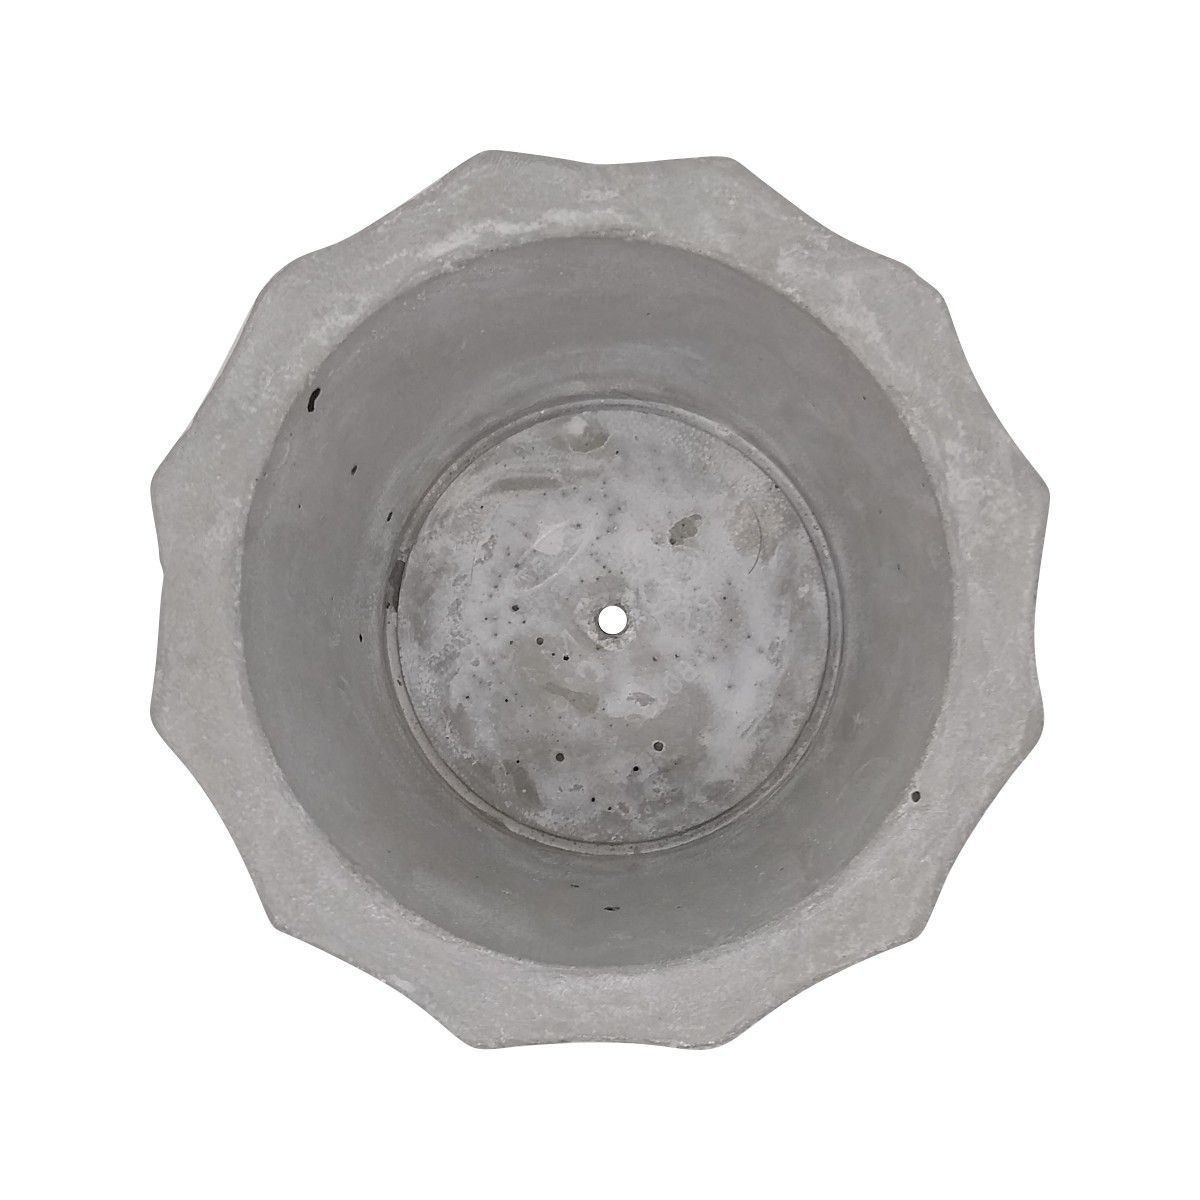 Vaso de Cimento 4,5 cm x 8,5 cm MD30